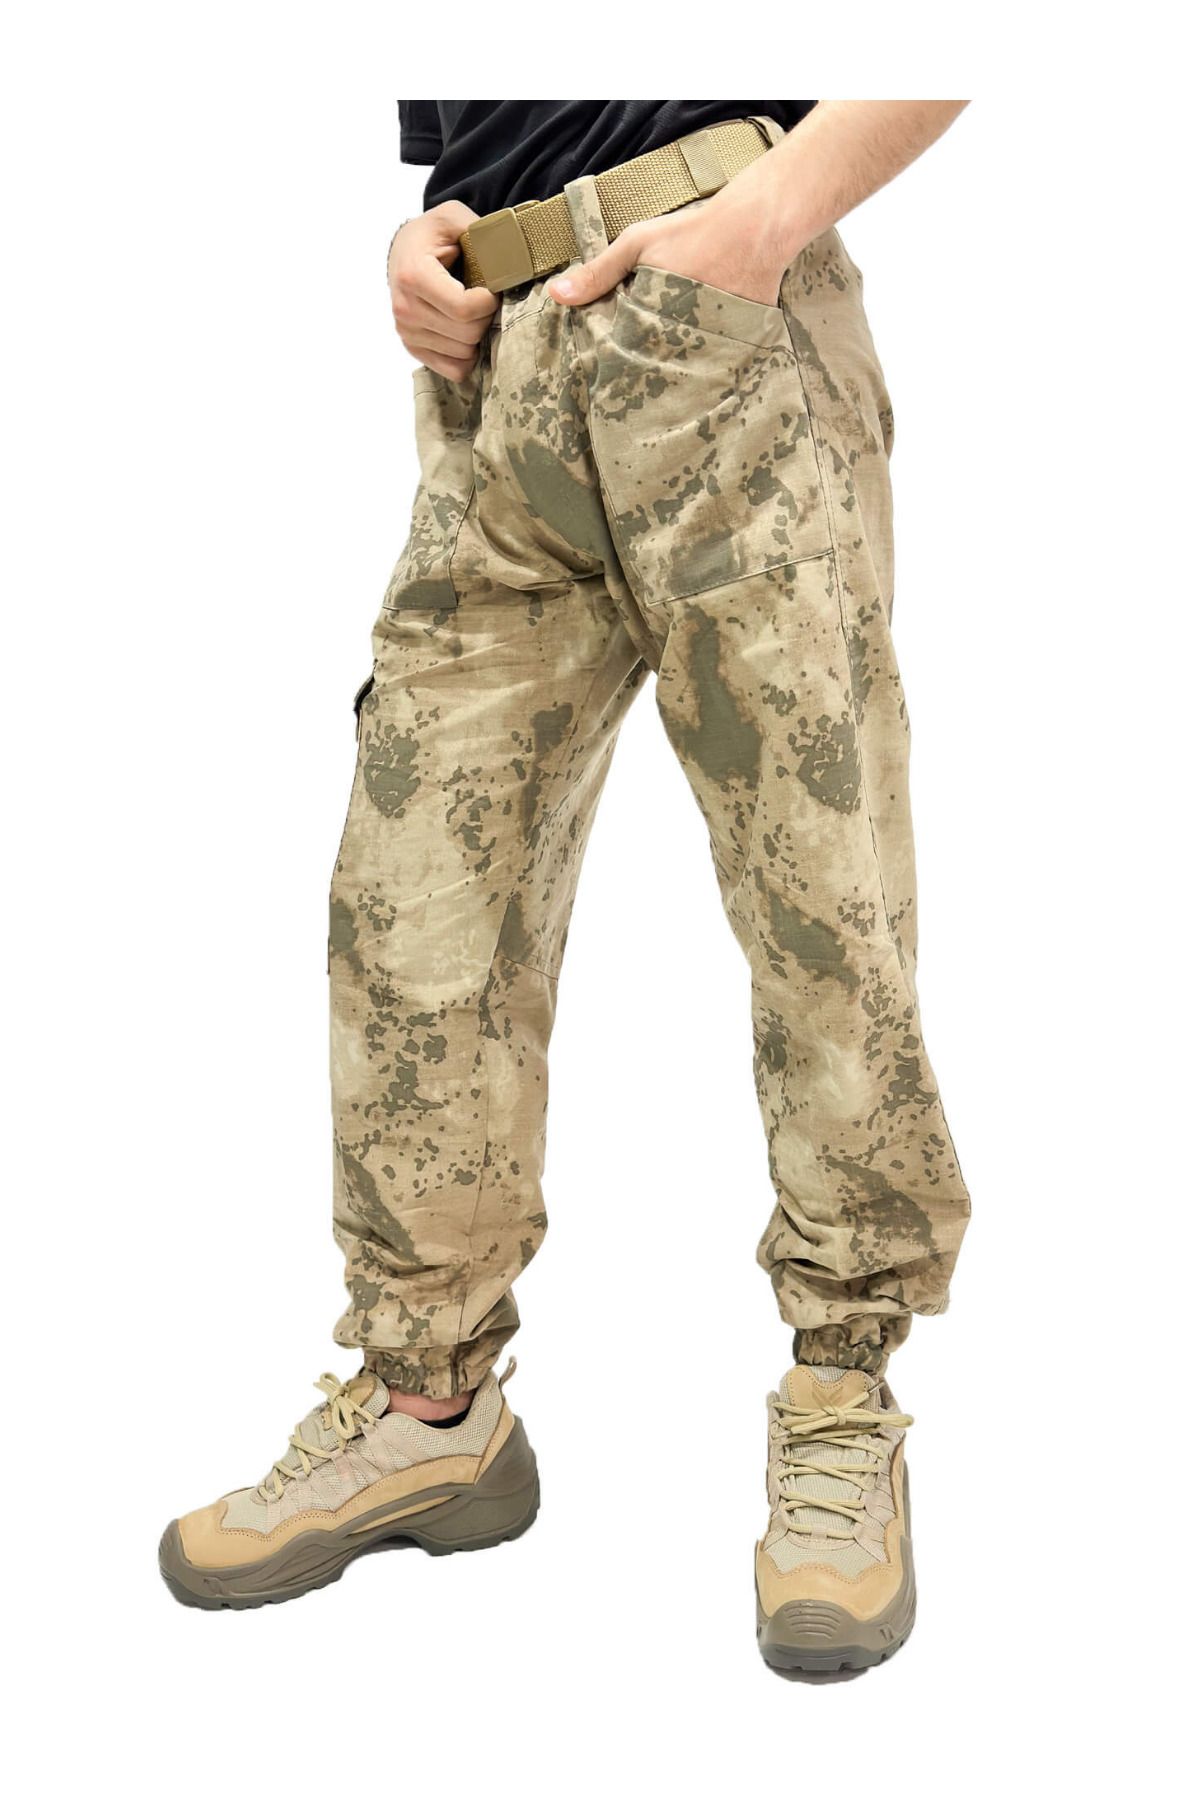 KORDAK Cepli Kamuflaj Kamuflaj Askeri Pantolon - Avcı Dağcı Asker Pantolonu